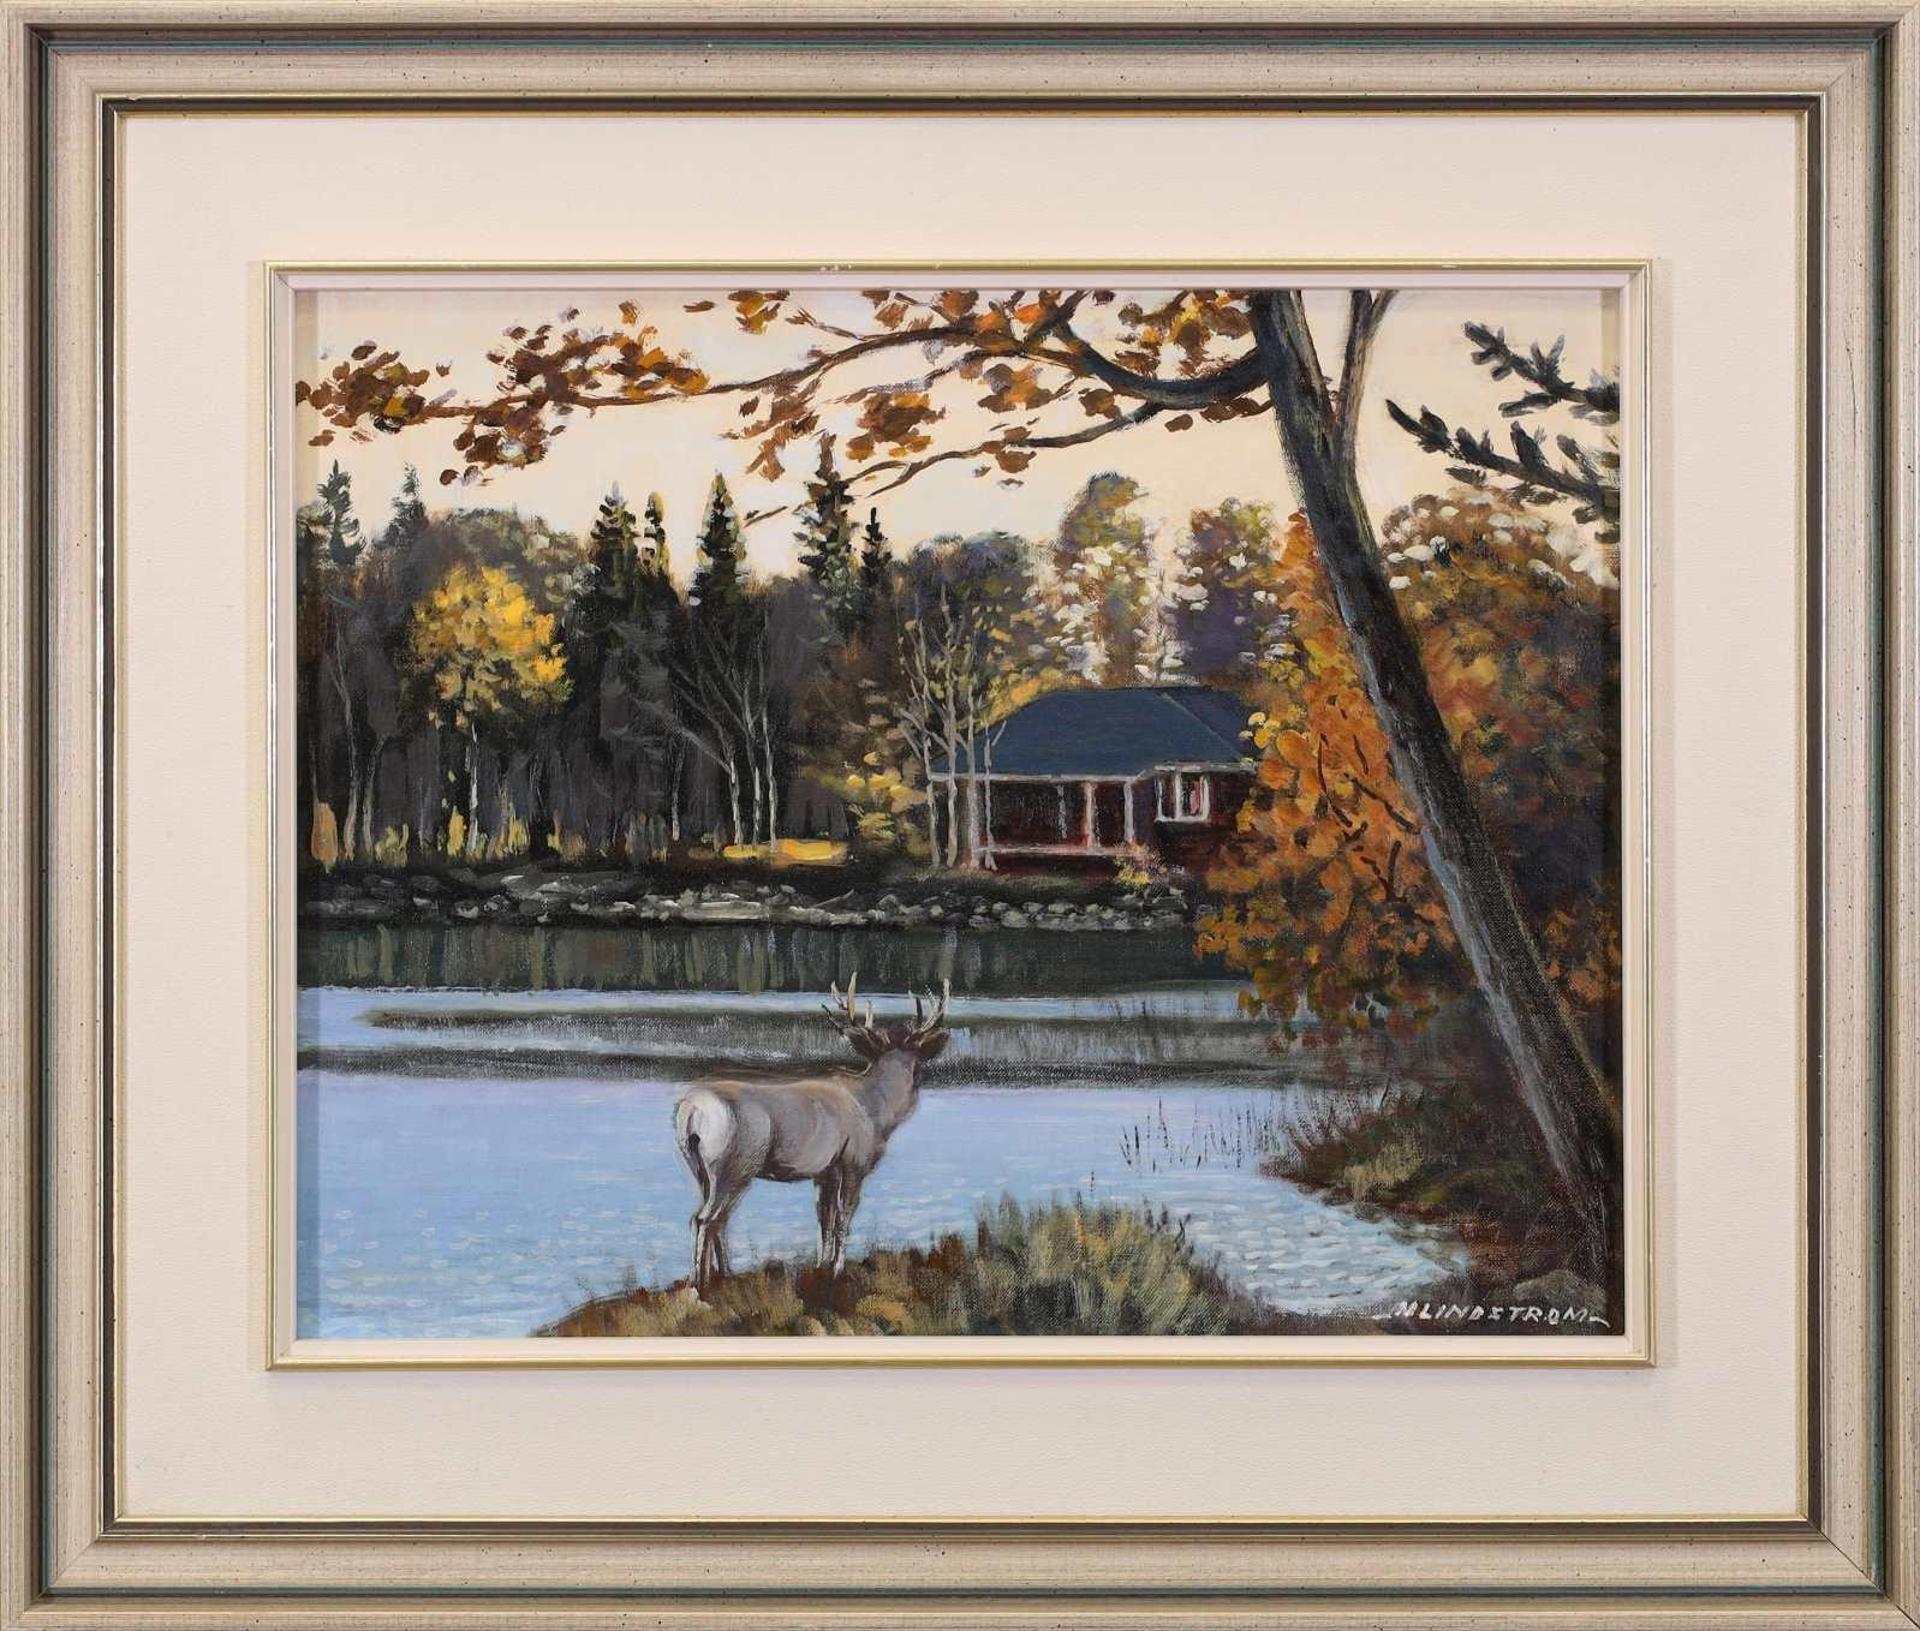 Matt Lindstrom (1890-1975) - Untitled, Deer Overlooking a Lakeside Cabin